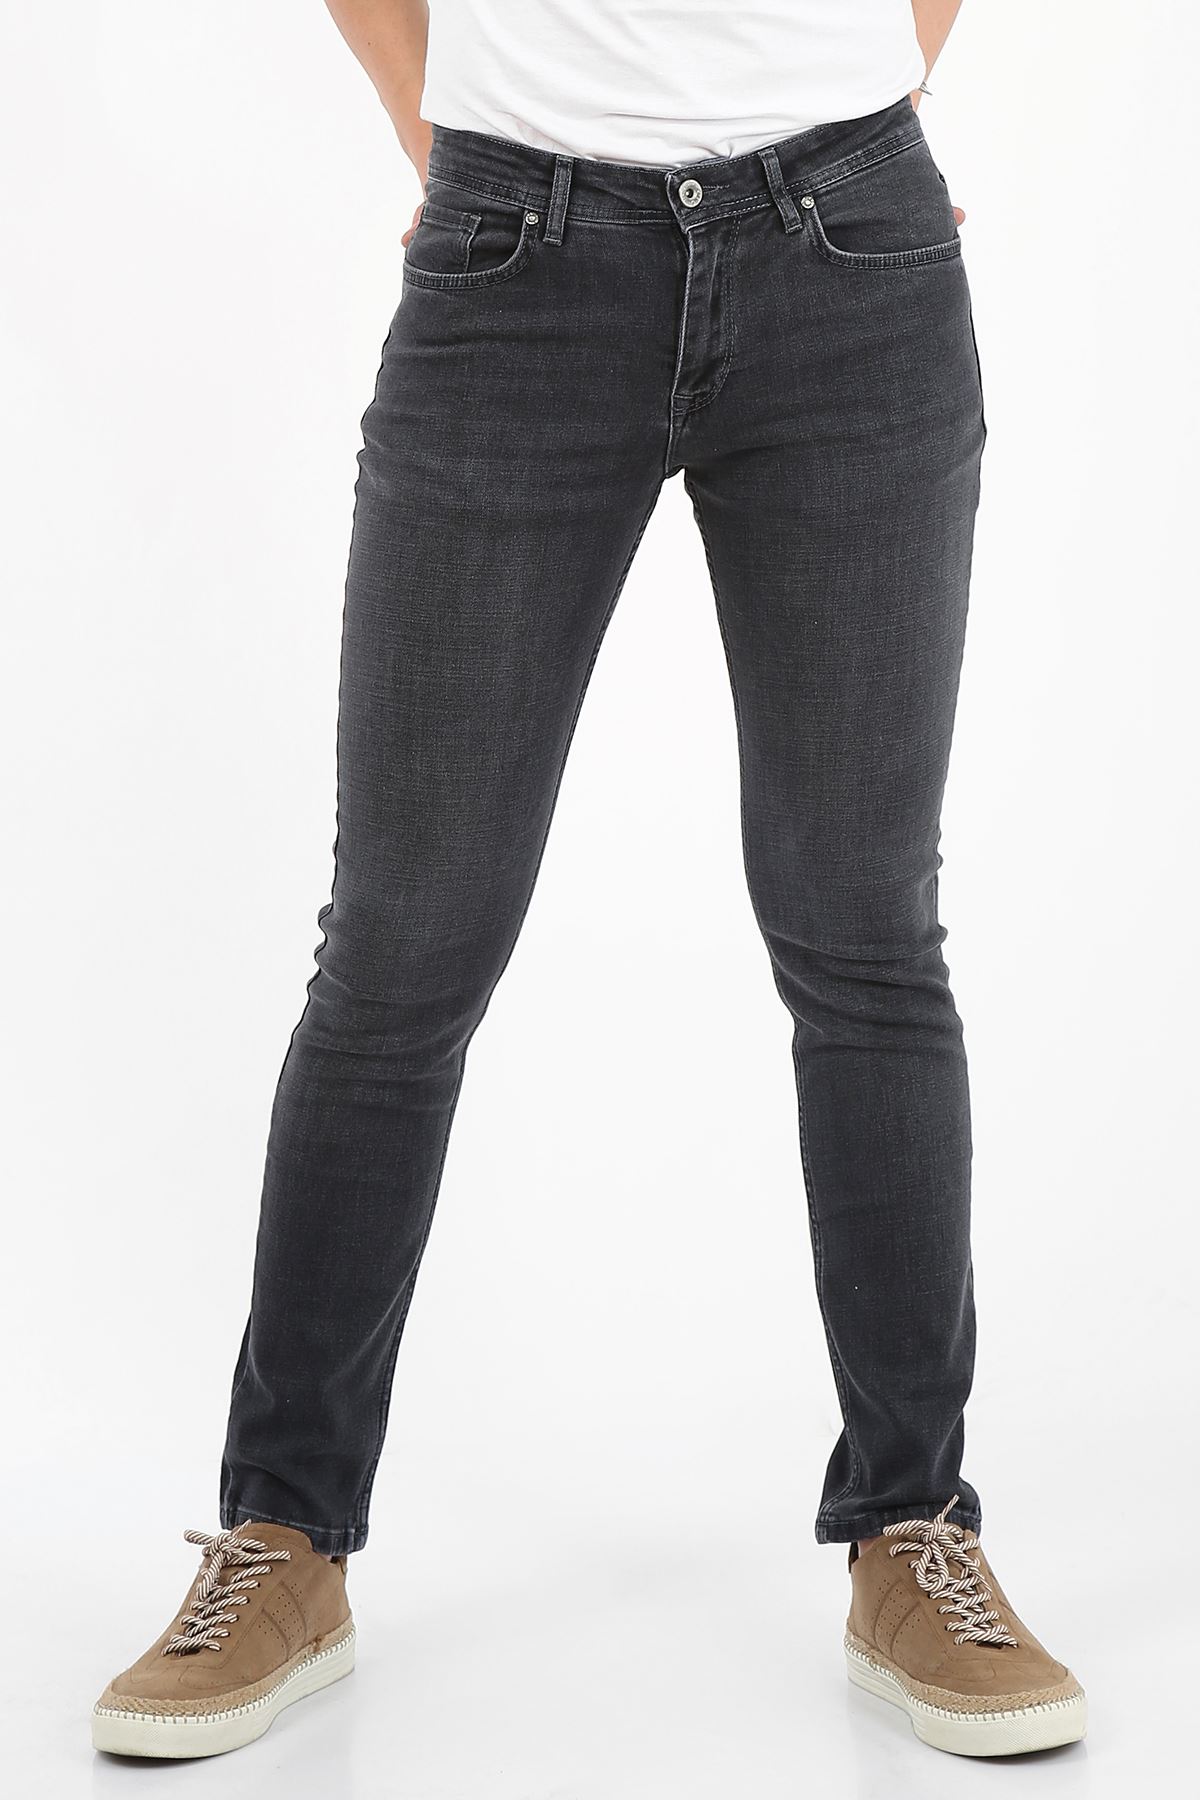 Blue Black Slim Fit Fermuarlı Erkek Jeans Pantolon-JONAS